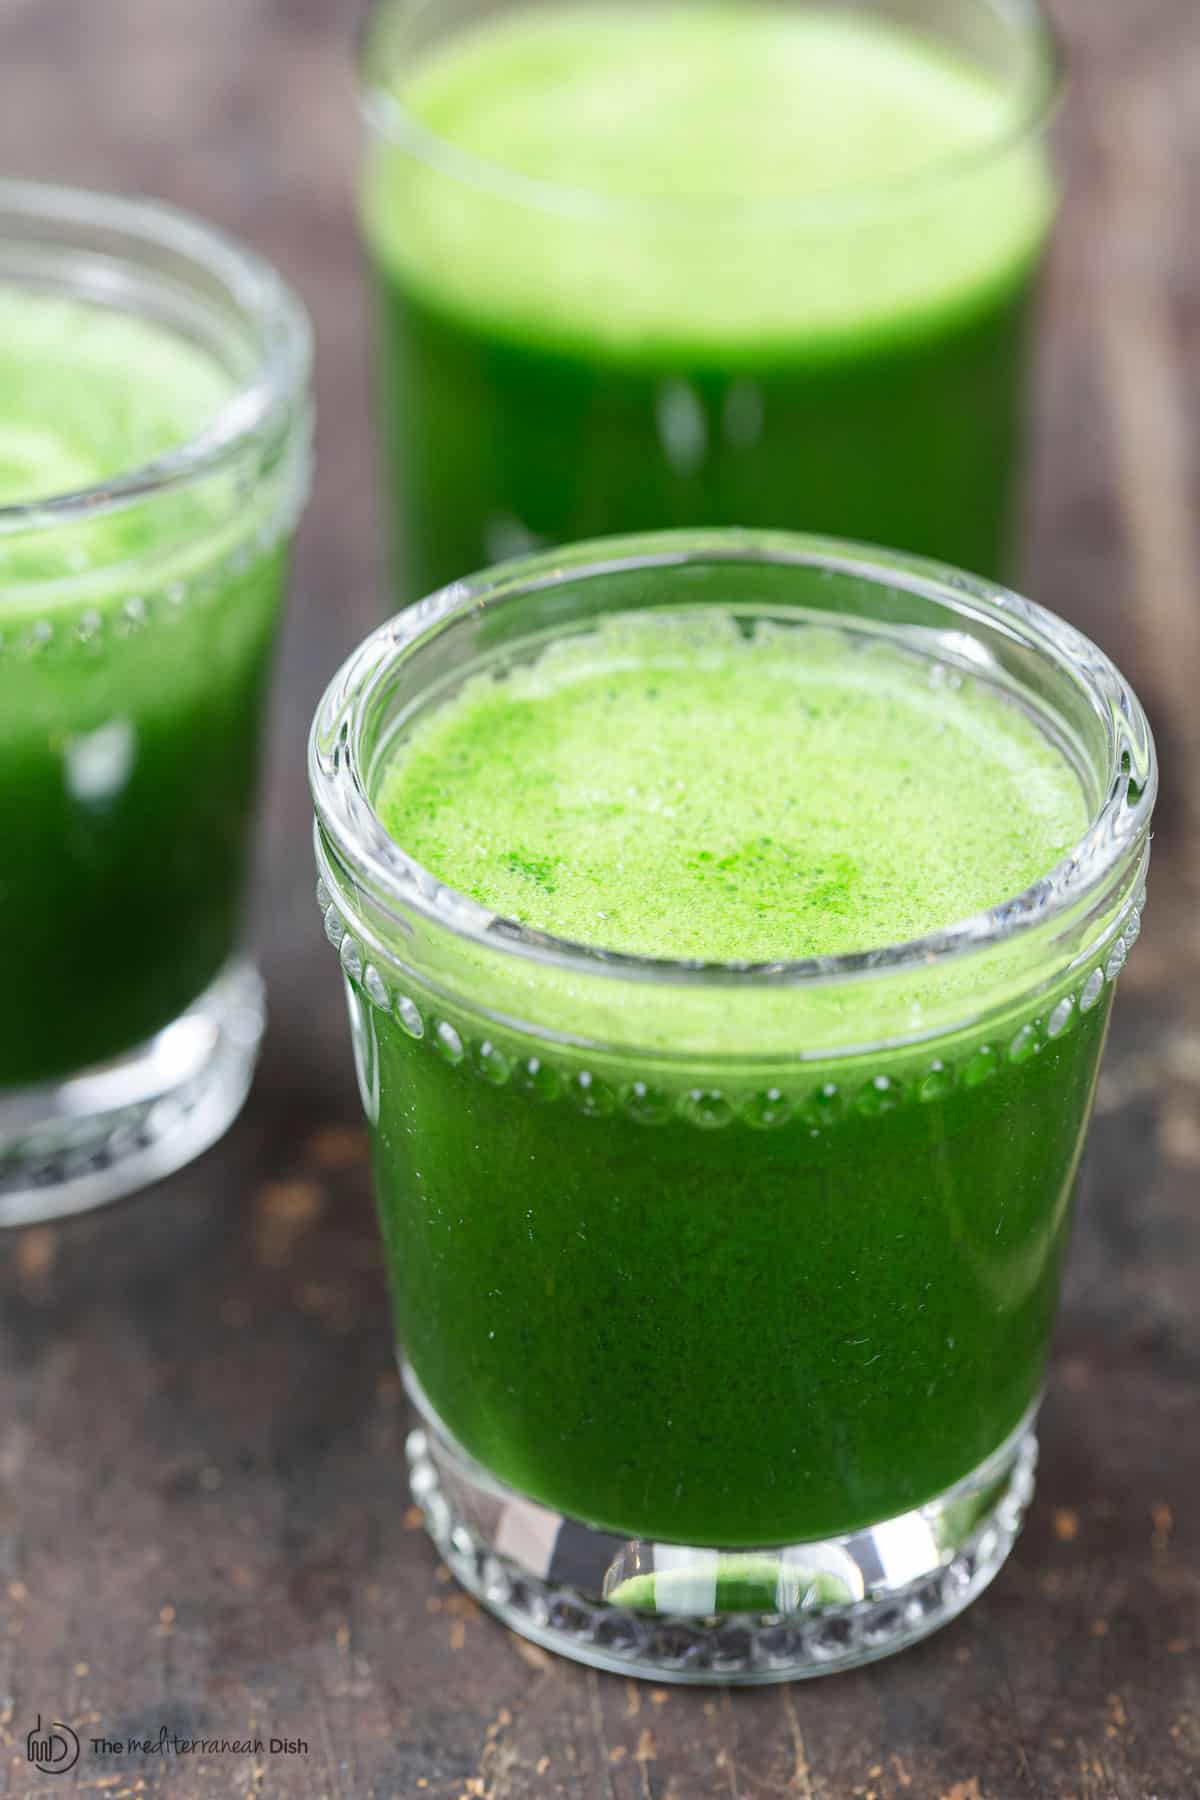 https://www.themediterraneandish.com/wp-content/uploads/2020/02/homemade-green-juice-recipe-4.jpg